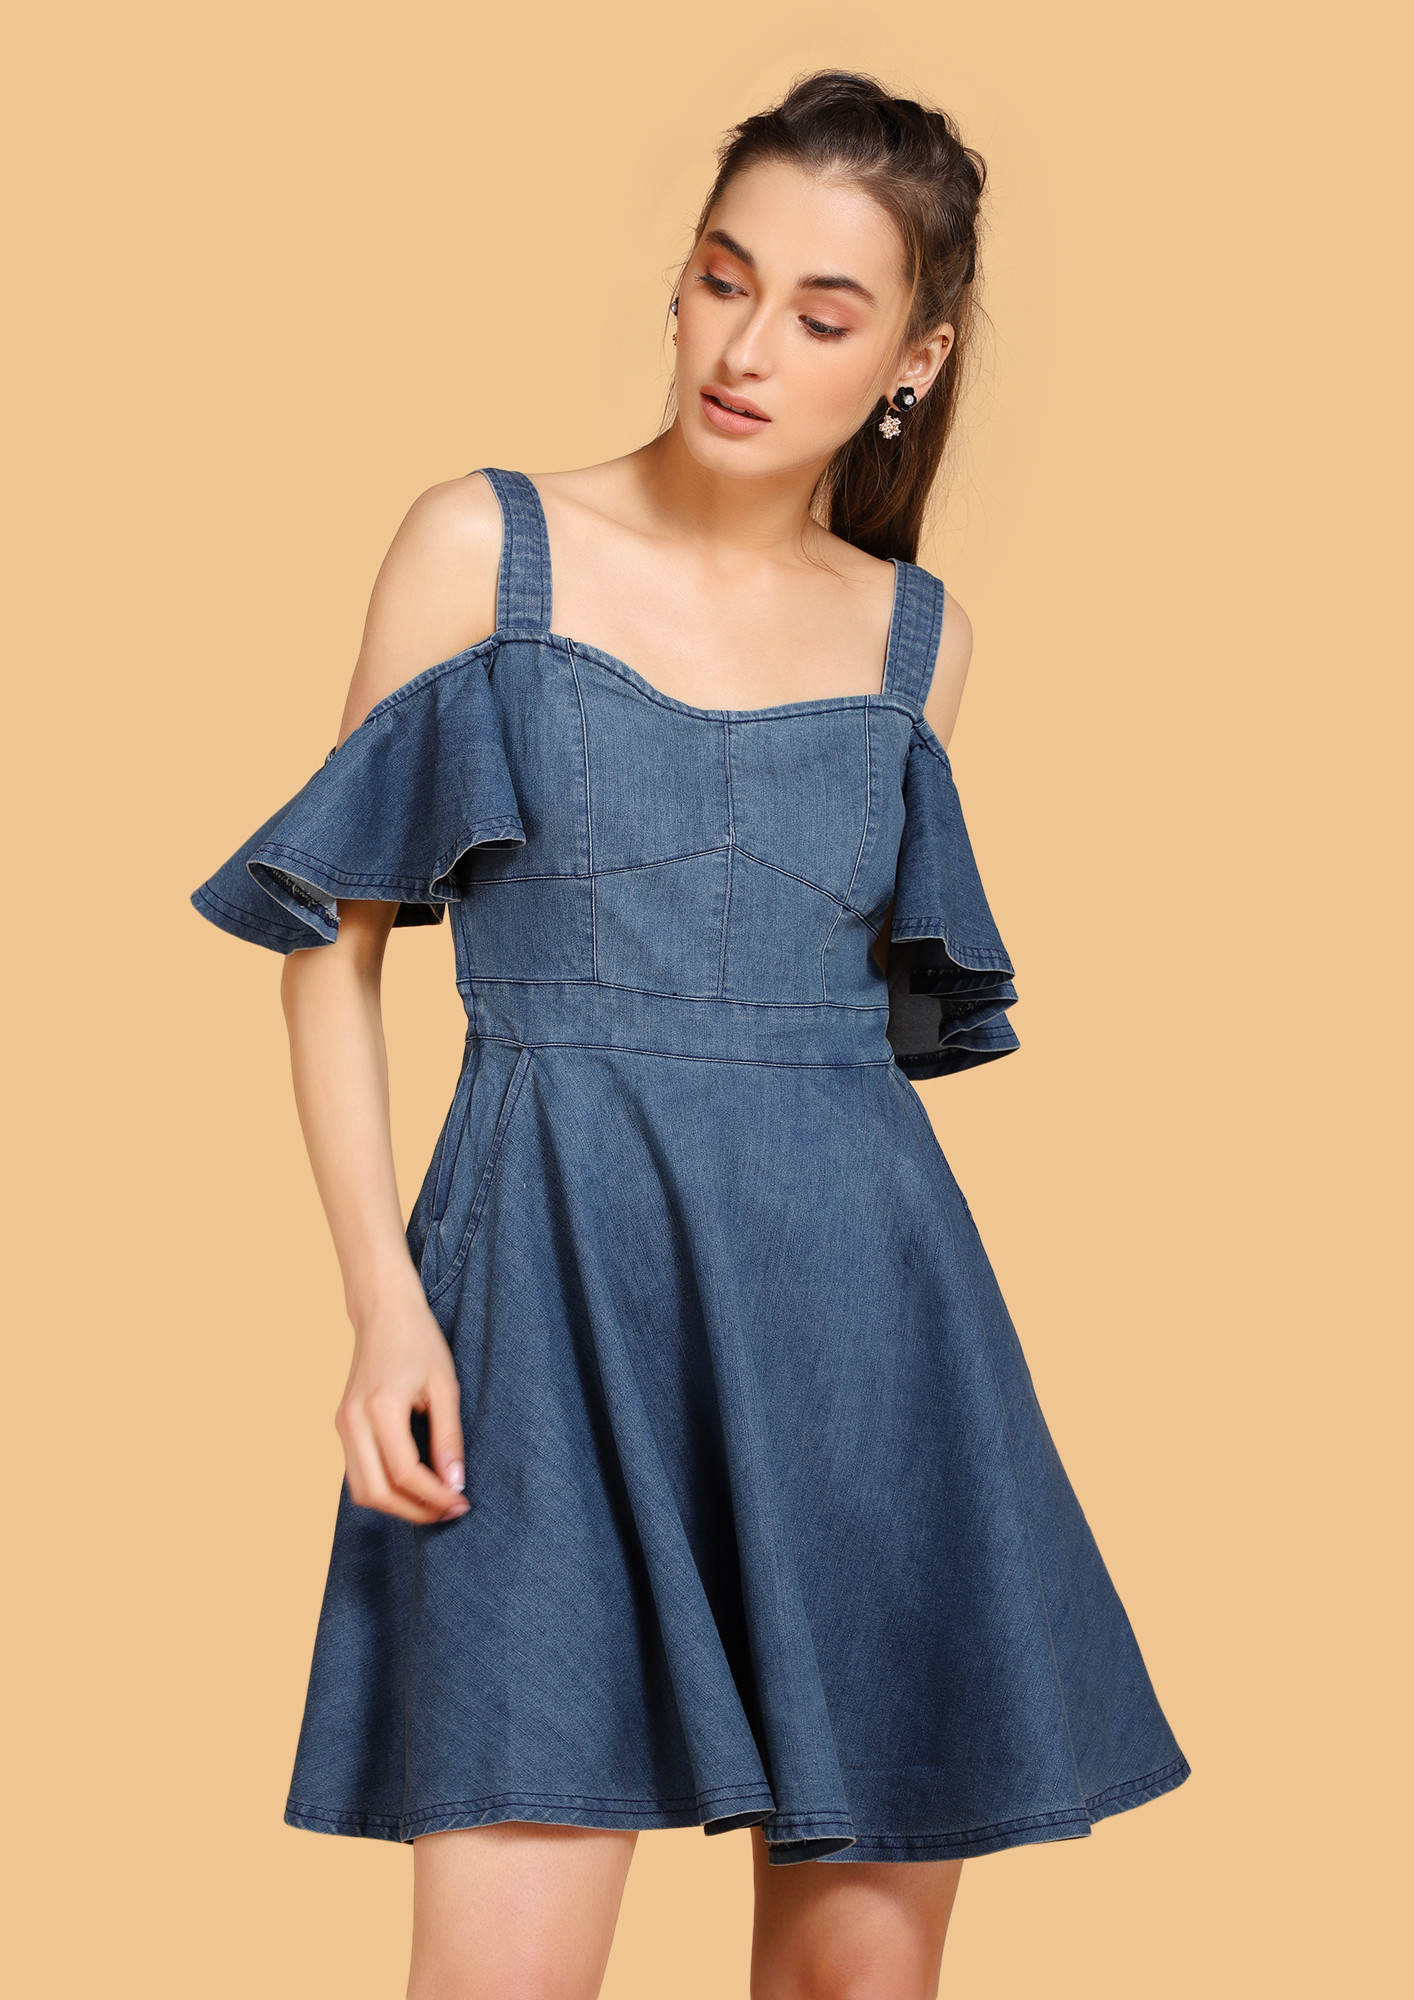 Buy StyleStone (3192DarkWndwS-Women's Dark Blue Denim Dress with Neck  Cutout at Amazon.in